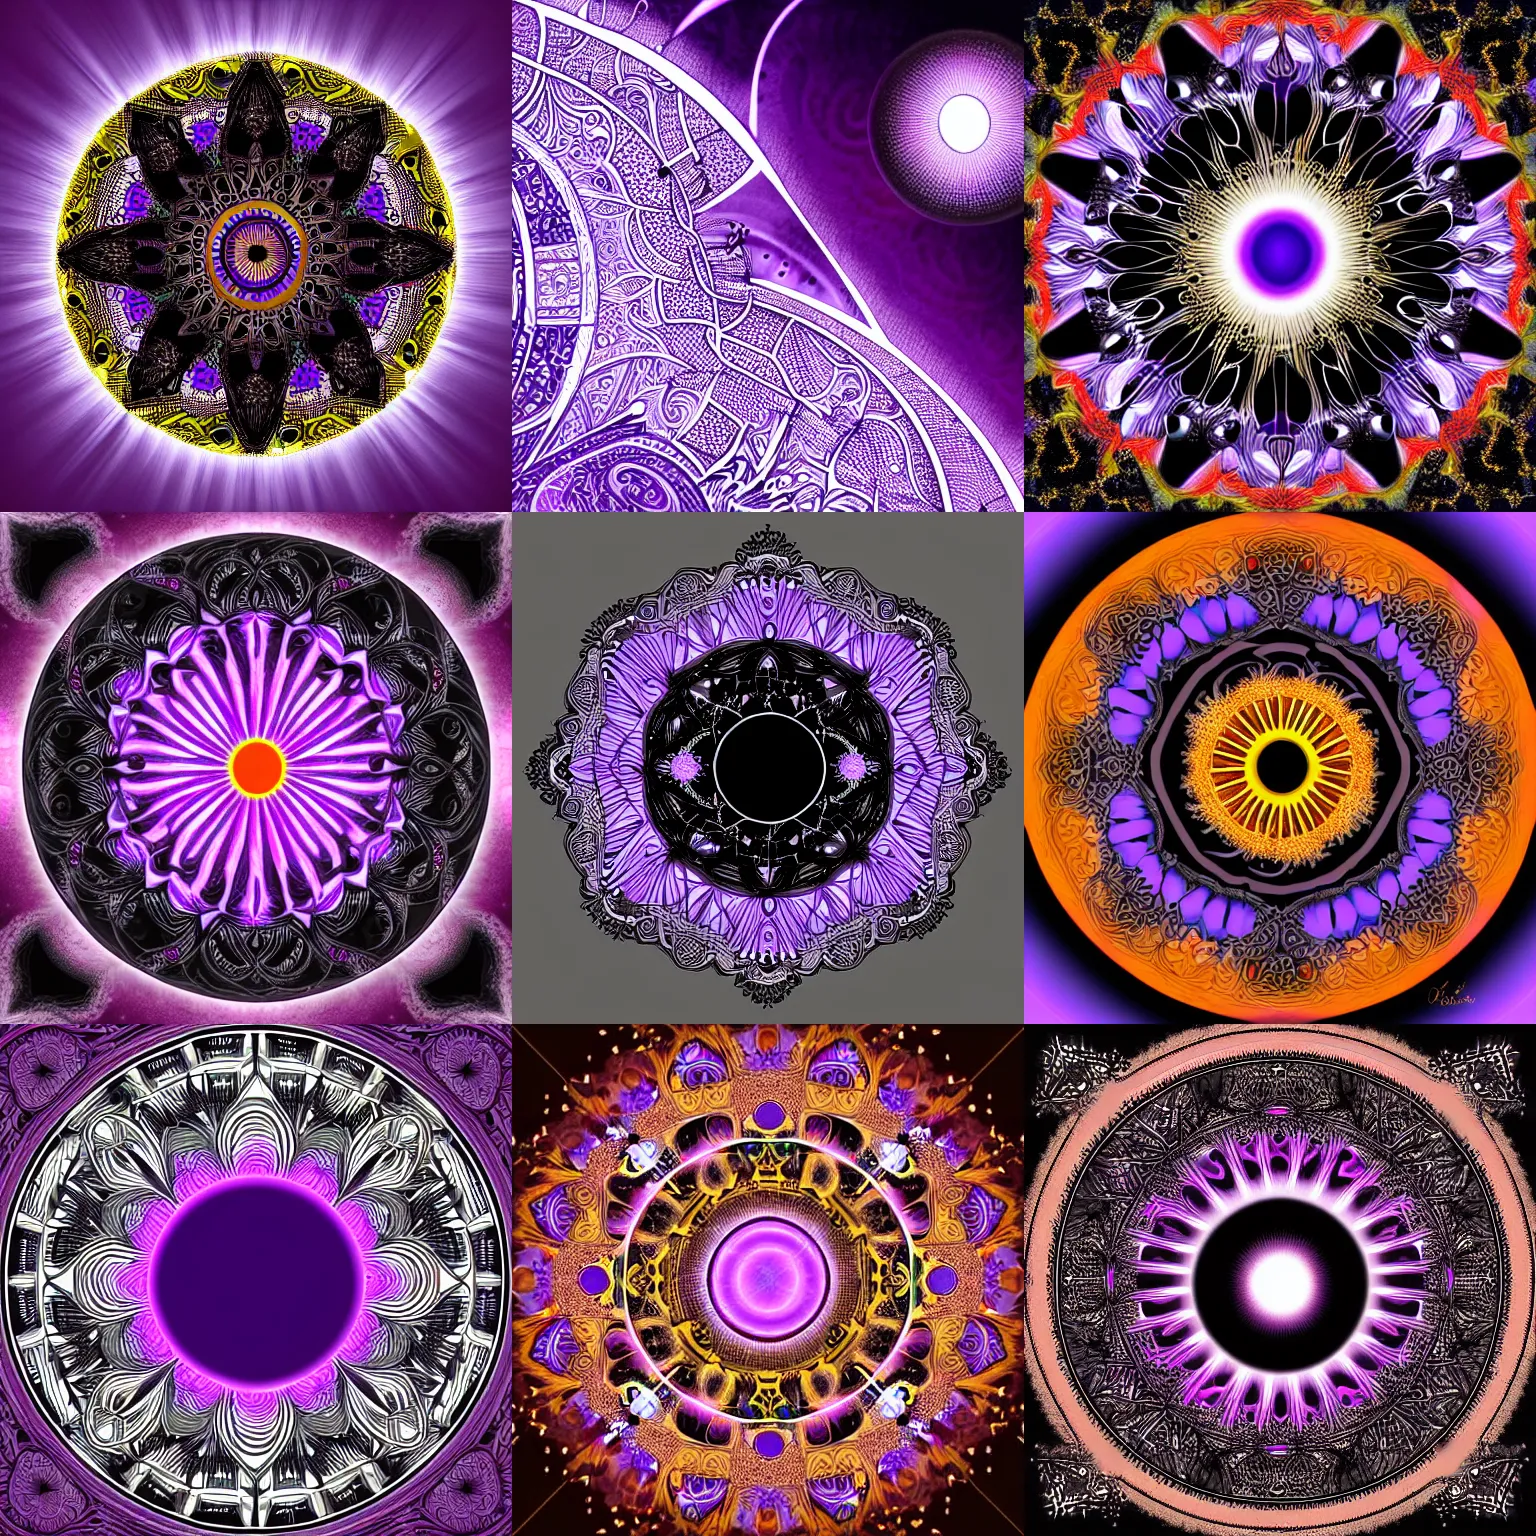 Prompt: black sun with purple eclipse, digital art, intricate details,